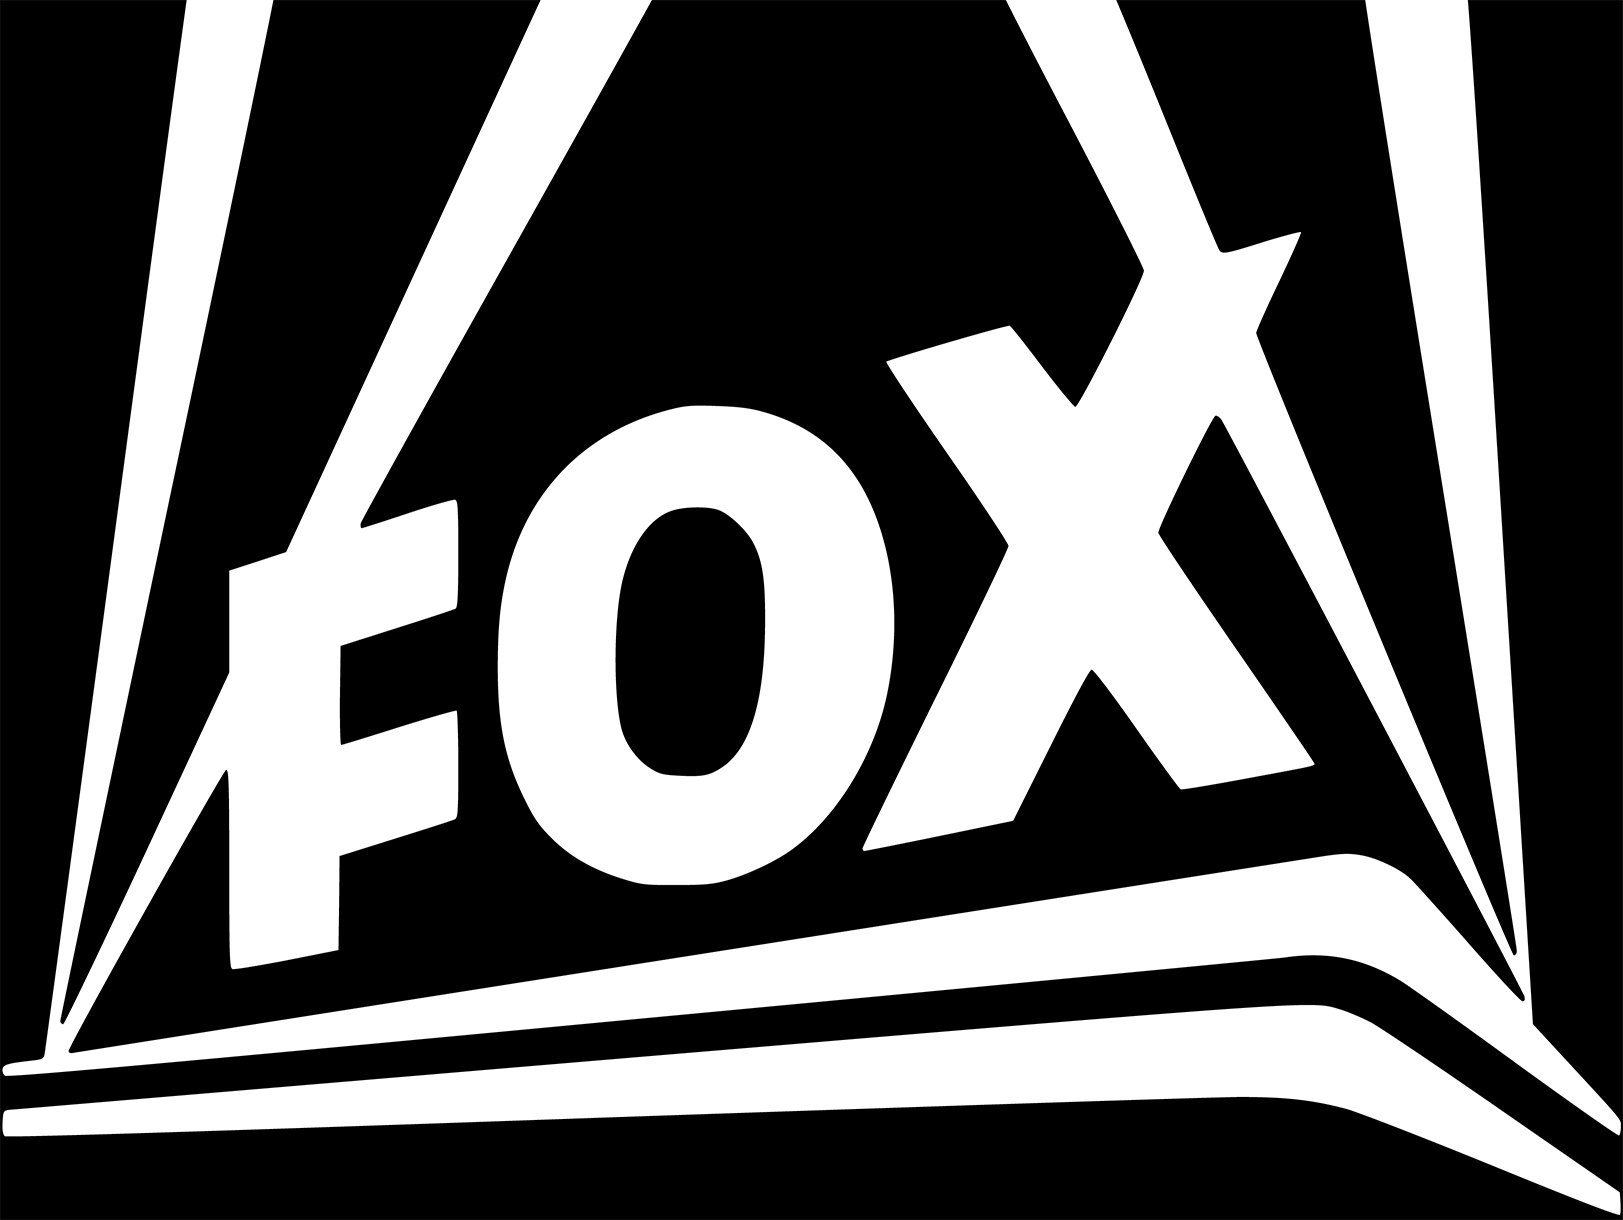 1987-1993_Fox_B&W_logo.png